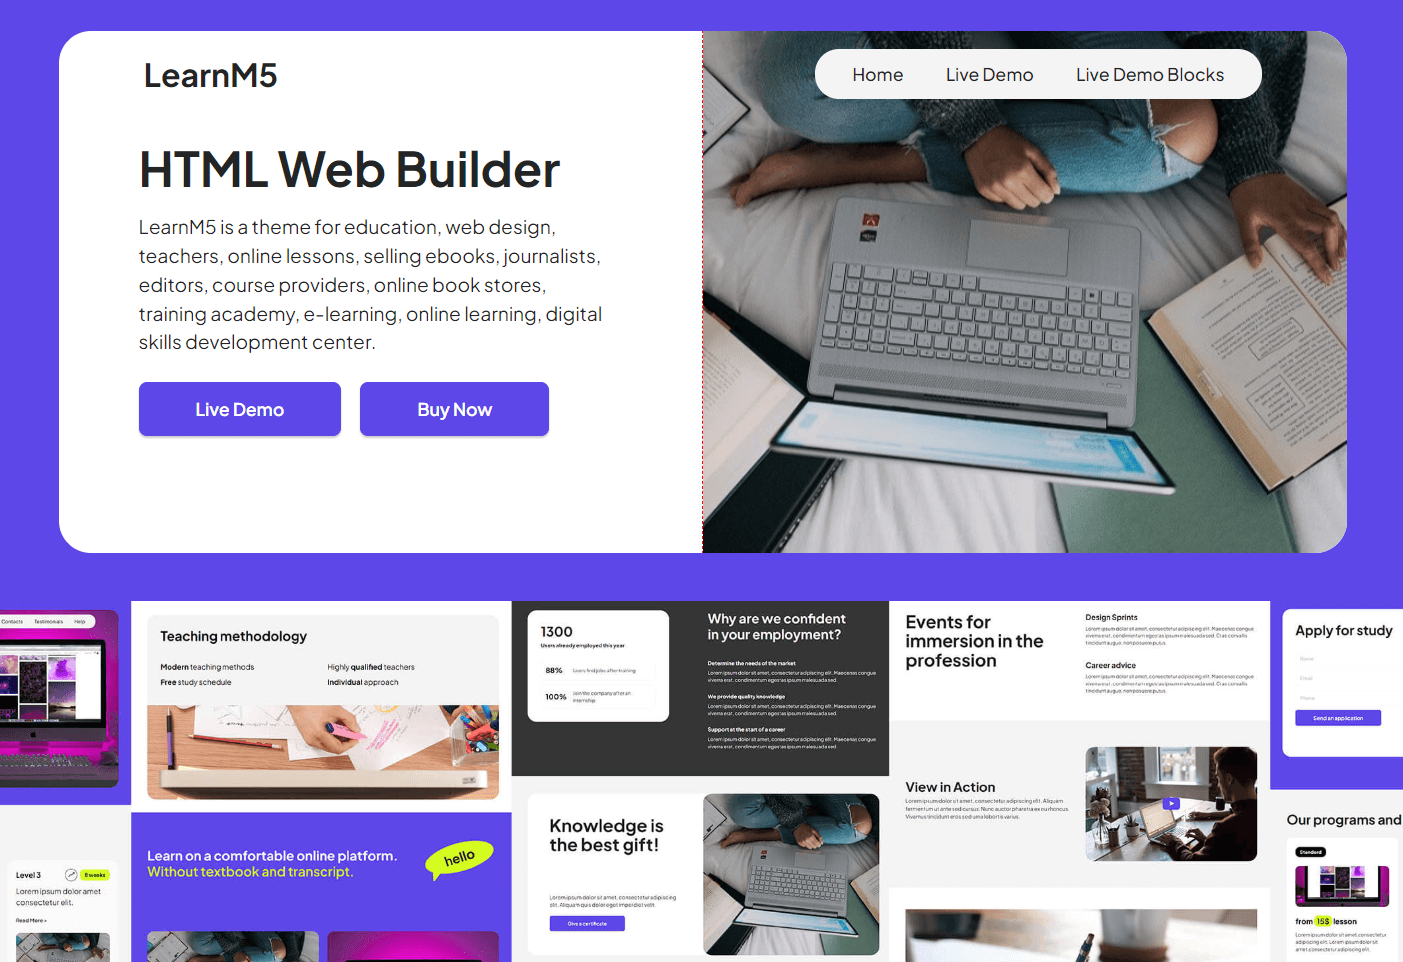  HTML Website Builder